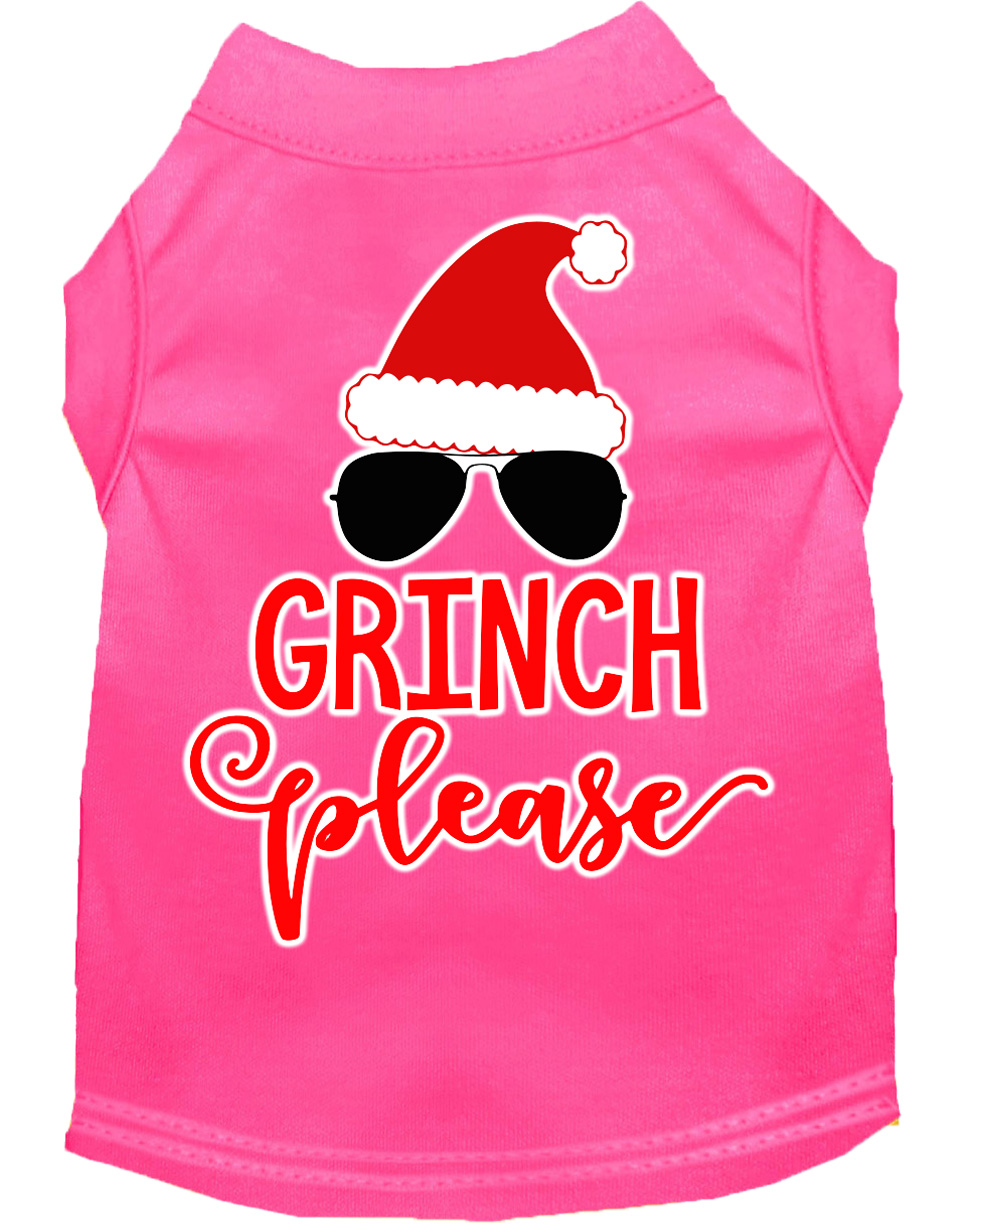 Grinch Please Screen Print Dog Shirt Bright Pink Lg